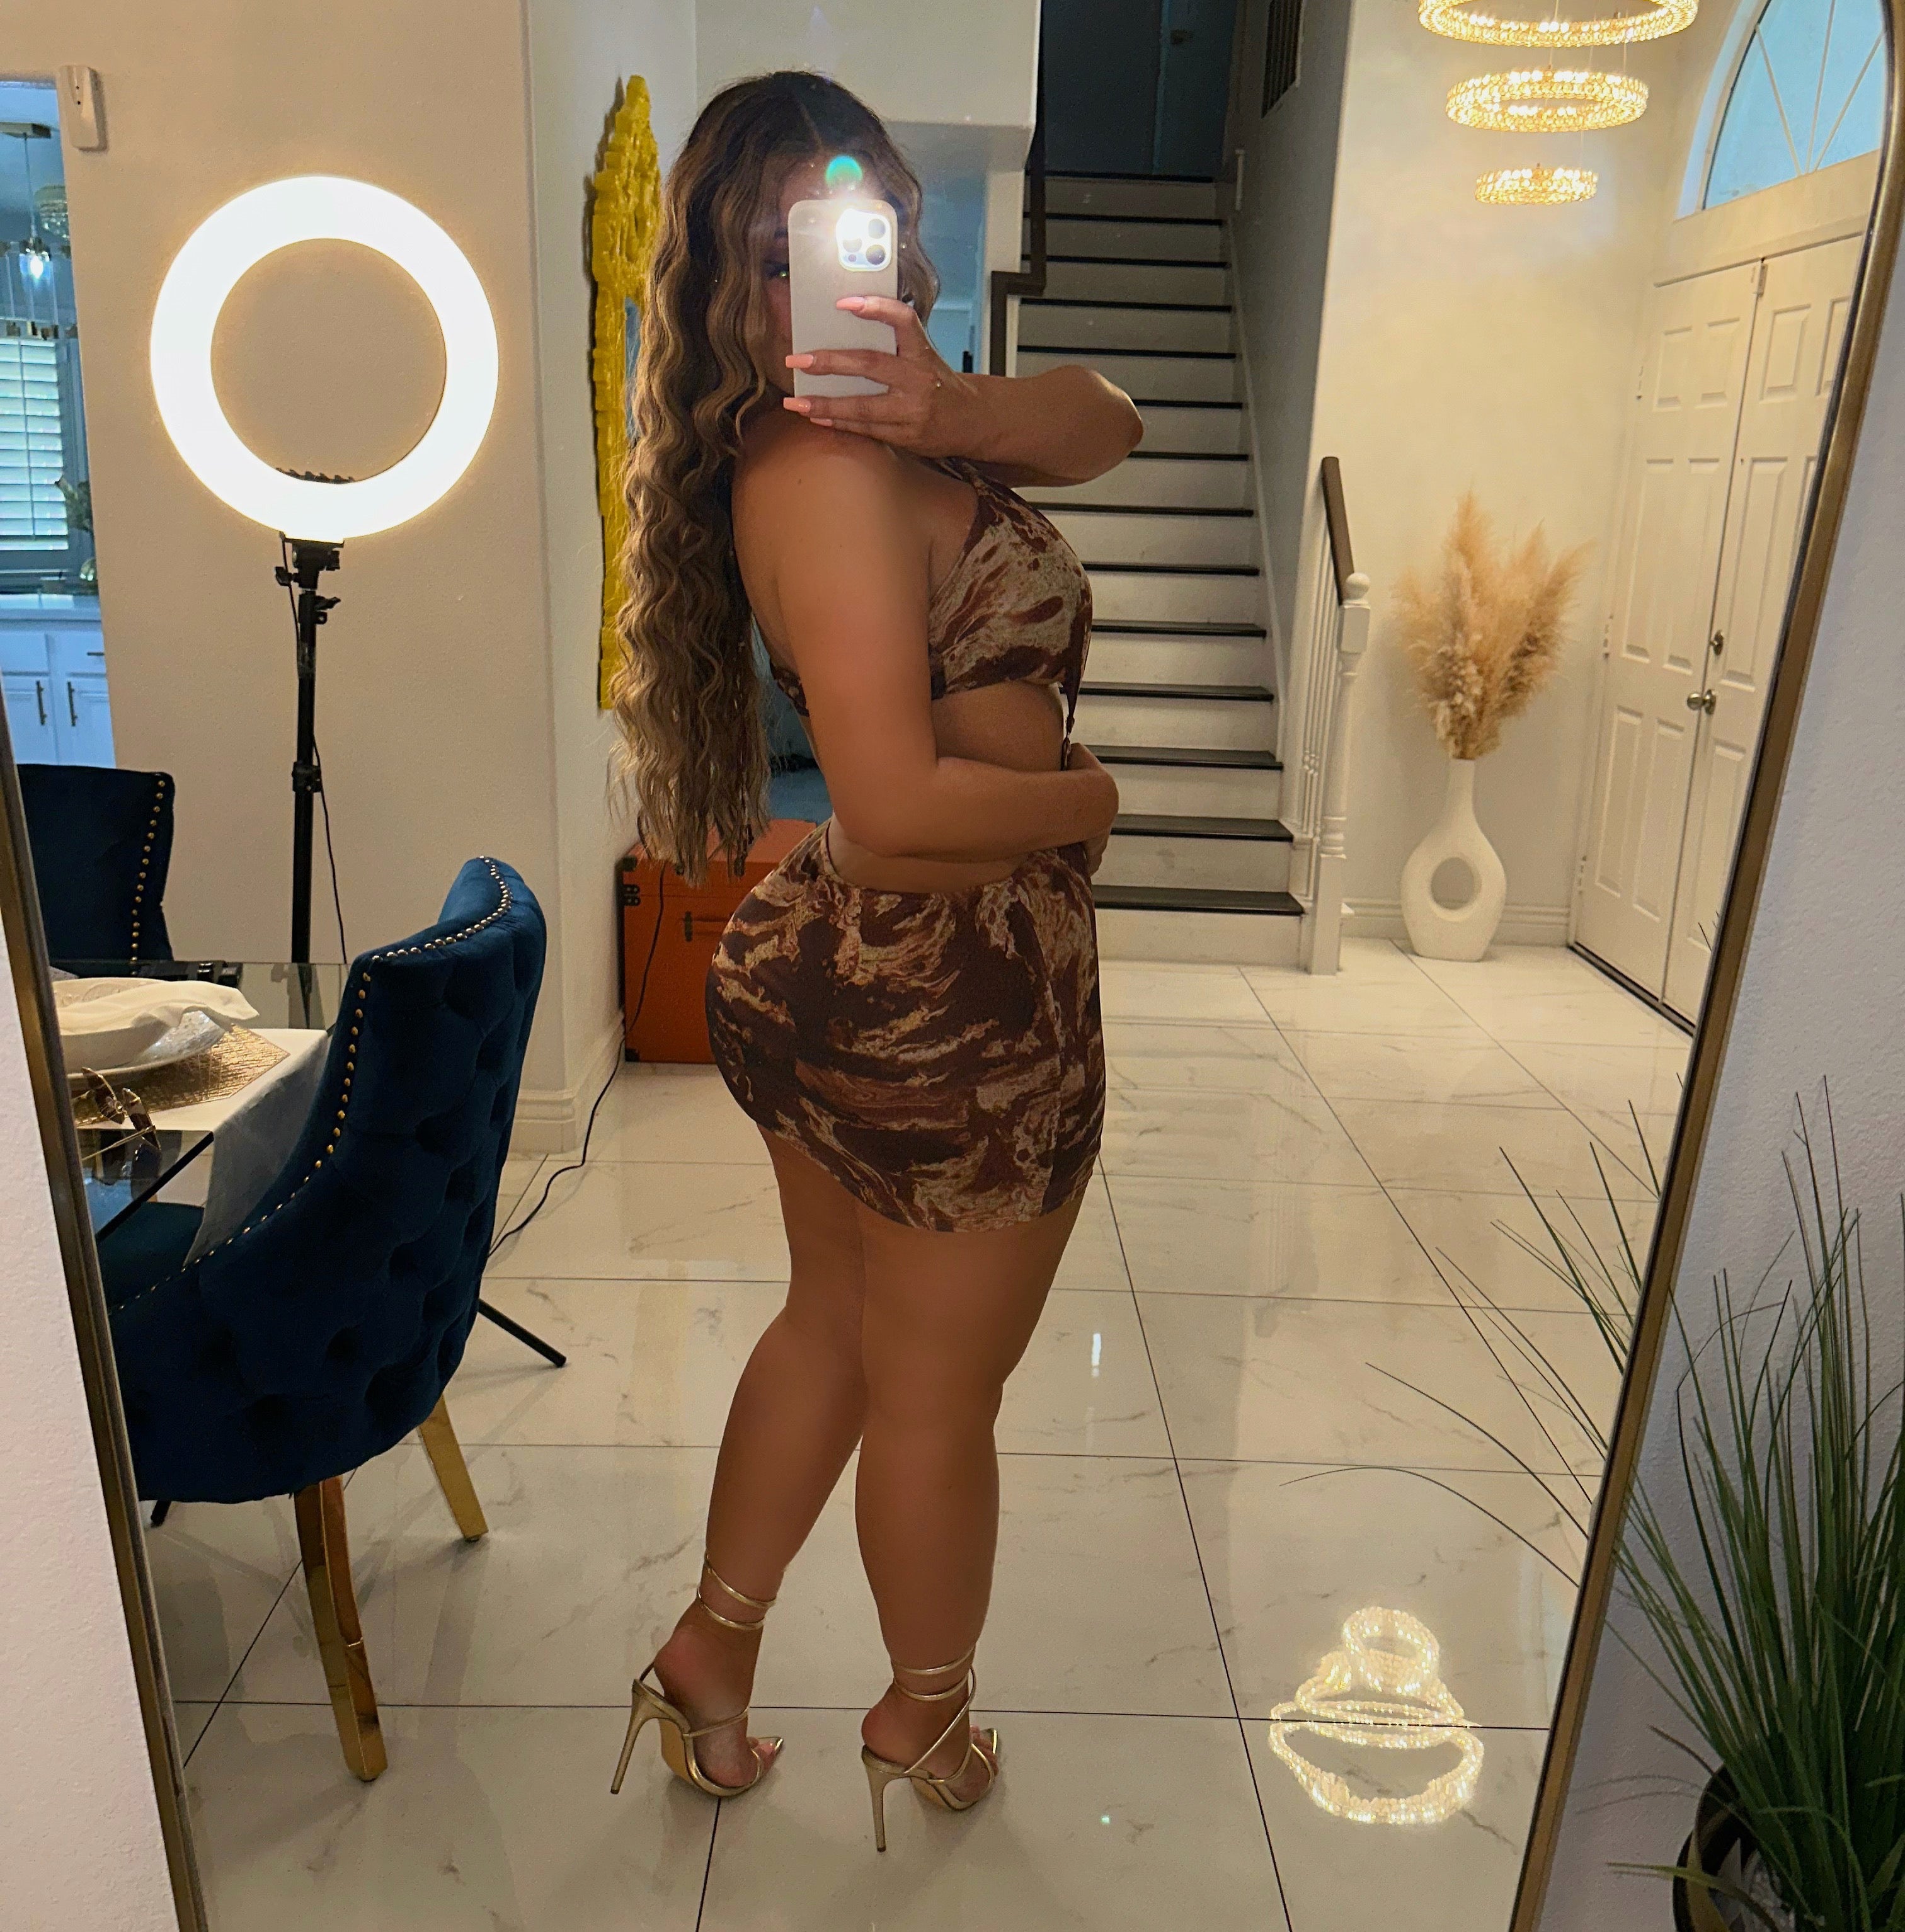 Serina sexy dress-Brown